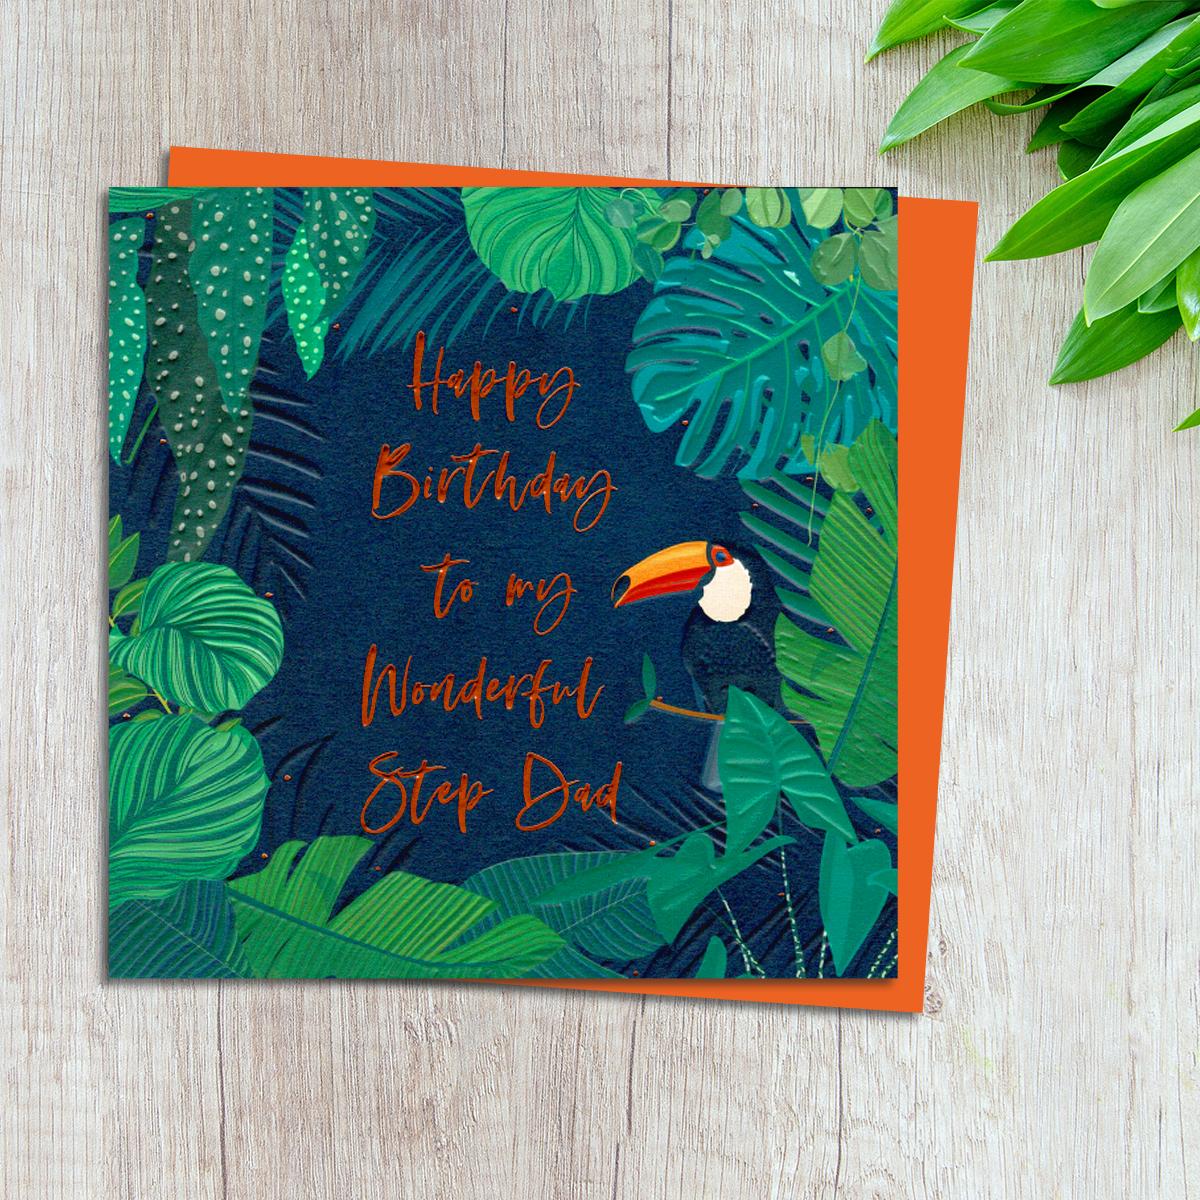 Stepdad Birthday Card Design Complete With Neon Orange Envelope